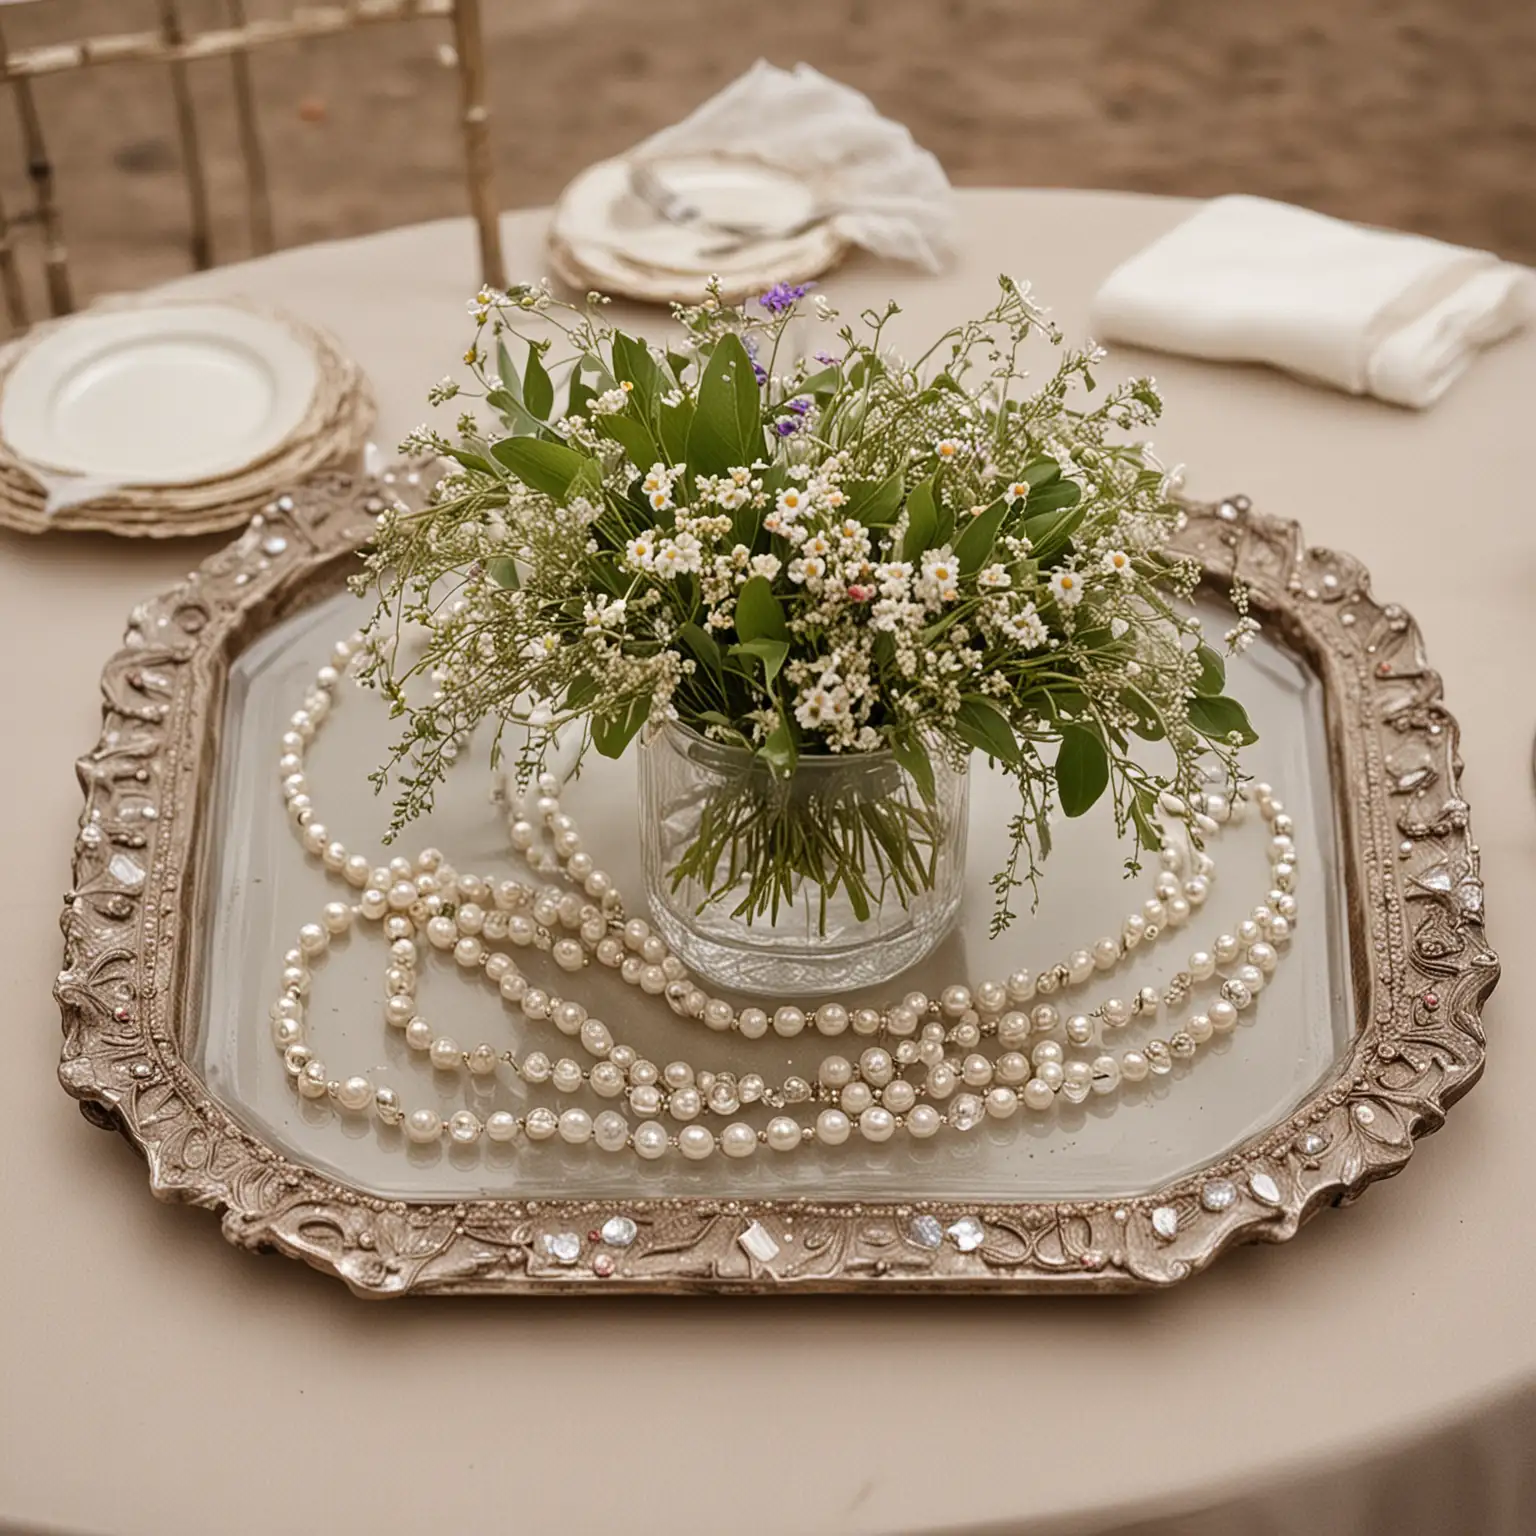 Elegant-DIY-Vintage-Wedding-Centerpiece-Wildflowers-and-Pearls-on-Antique-Crystal-Tray